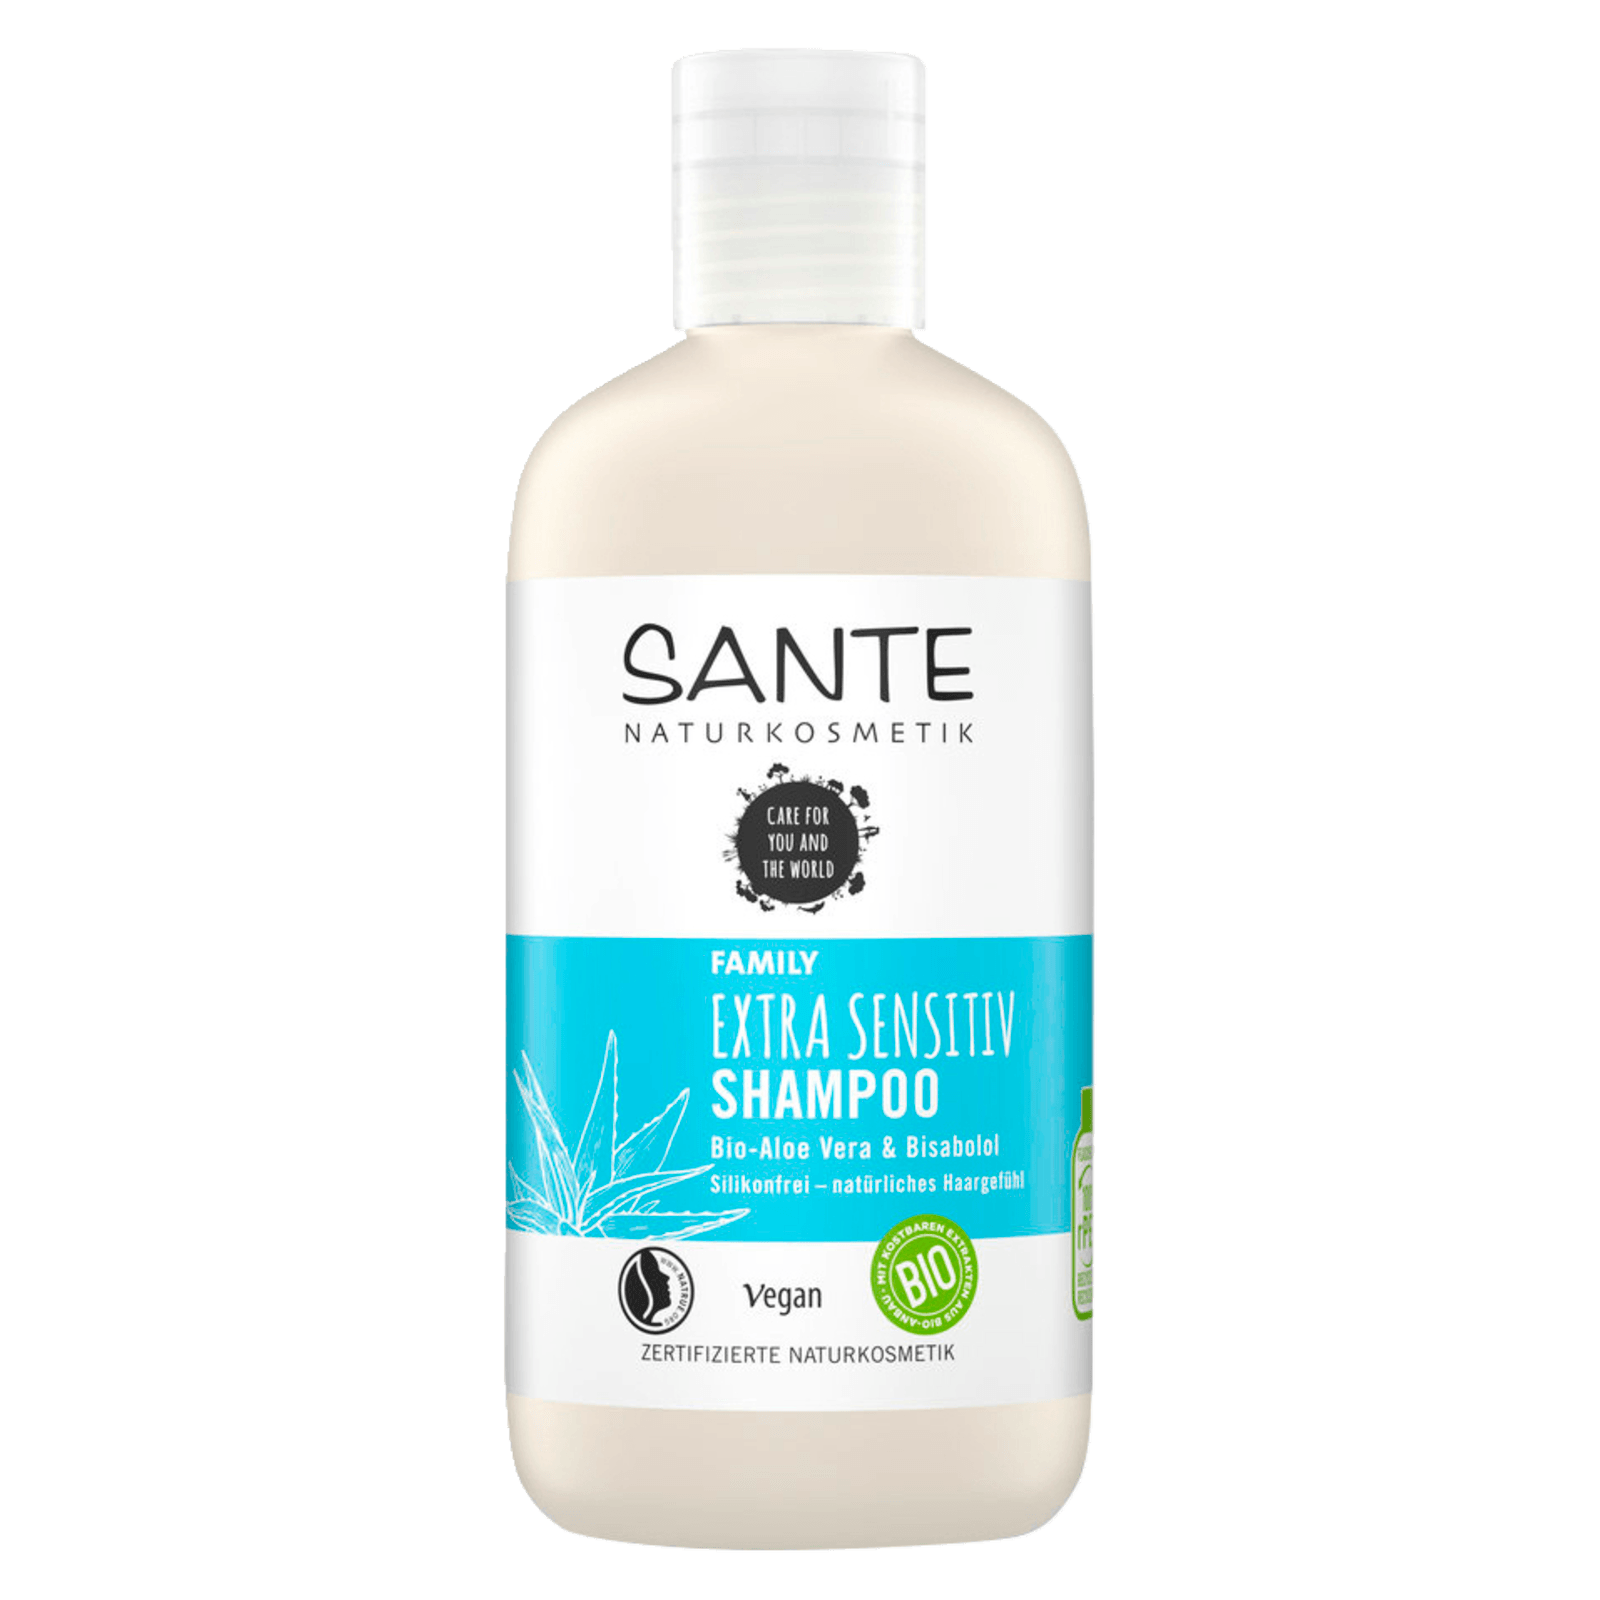 Sante Naturkosmetik Family Extra Sensitiv REWE bestellen! bei Shampoo 250ml online